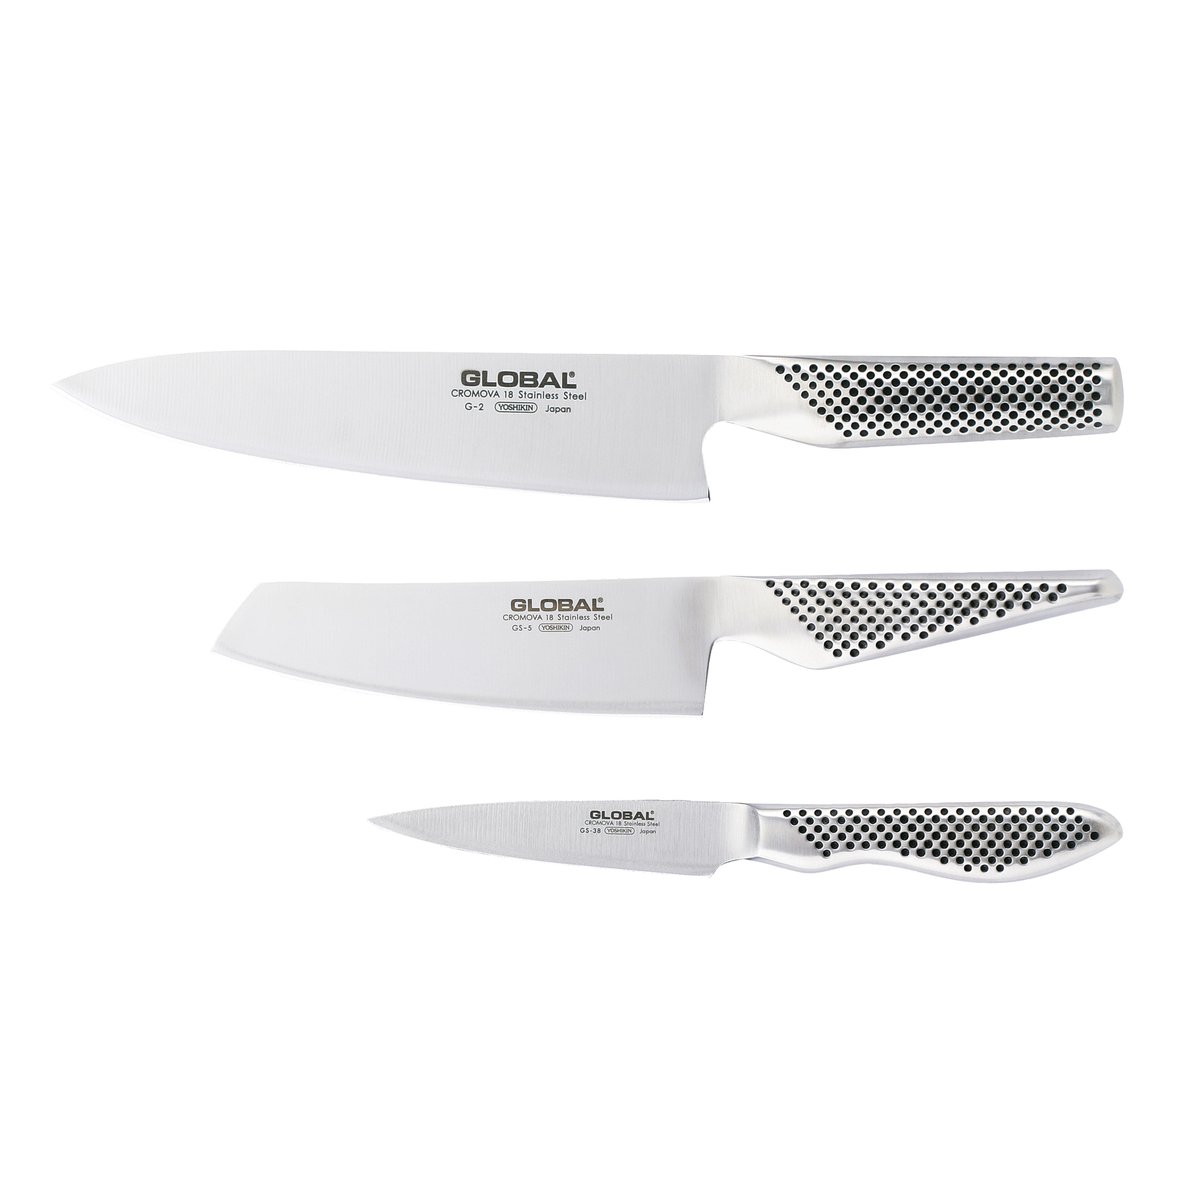 Global Global G-2538R knivsæt, 3 knive Rustfrit stål (4943691253804)